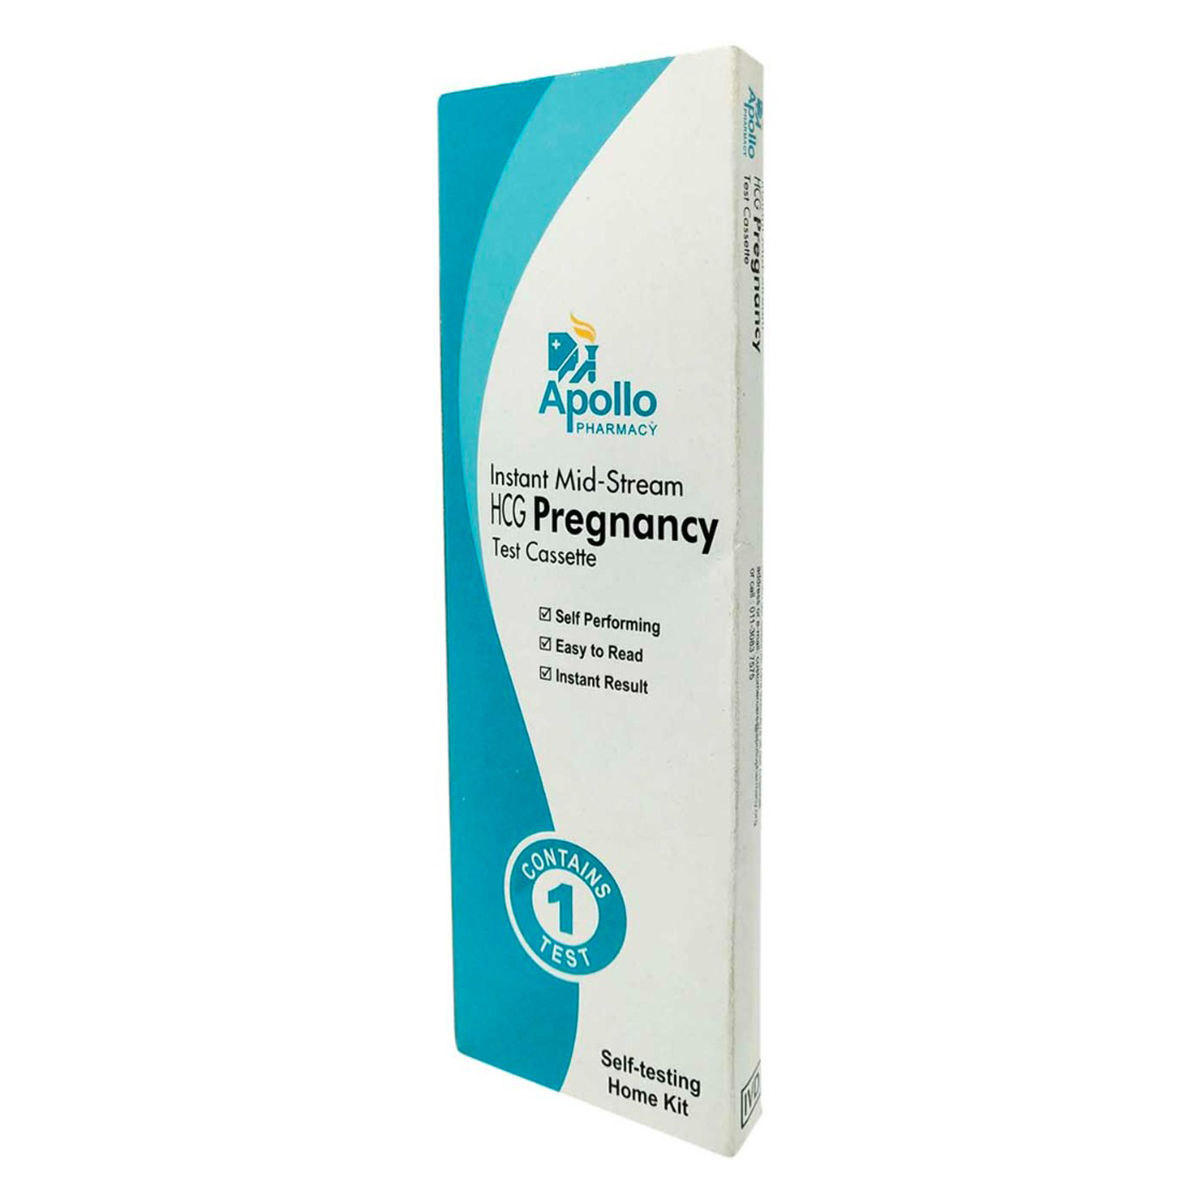 Buy Apollo Pharmacy Instant Mid-Stream HCG Pregnancy Test Cassette, 1 Count Online